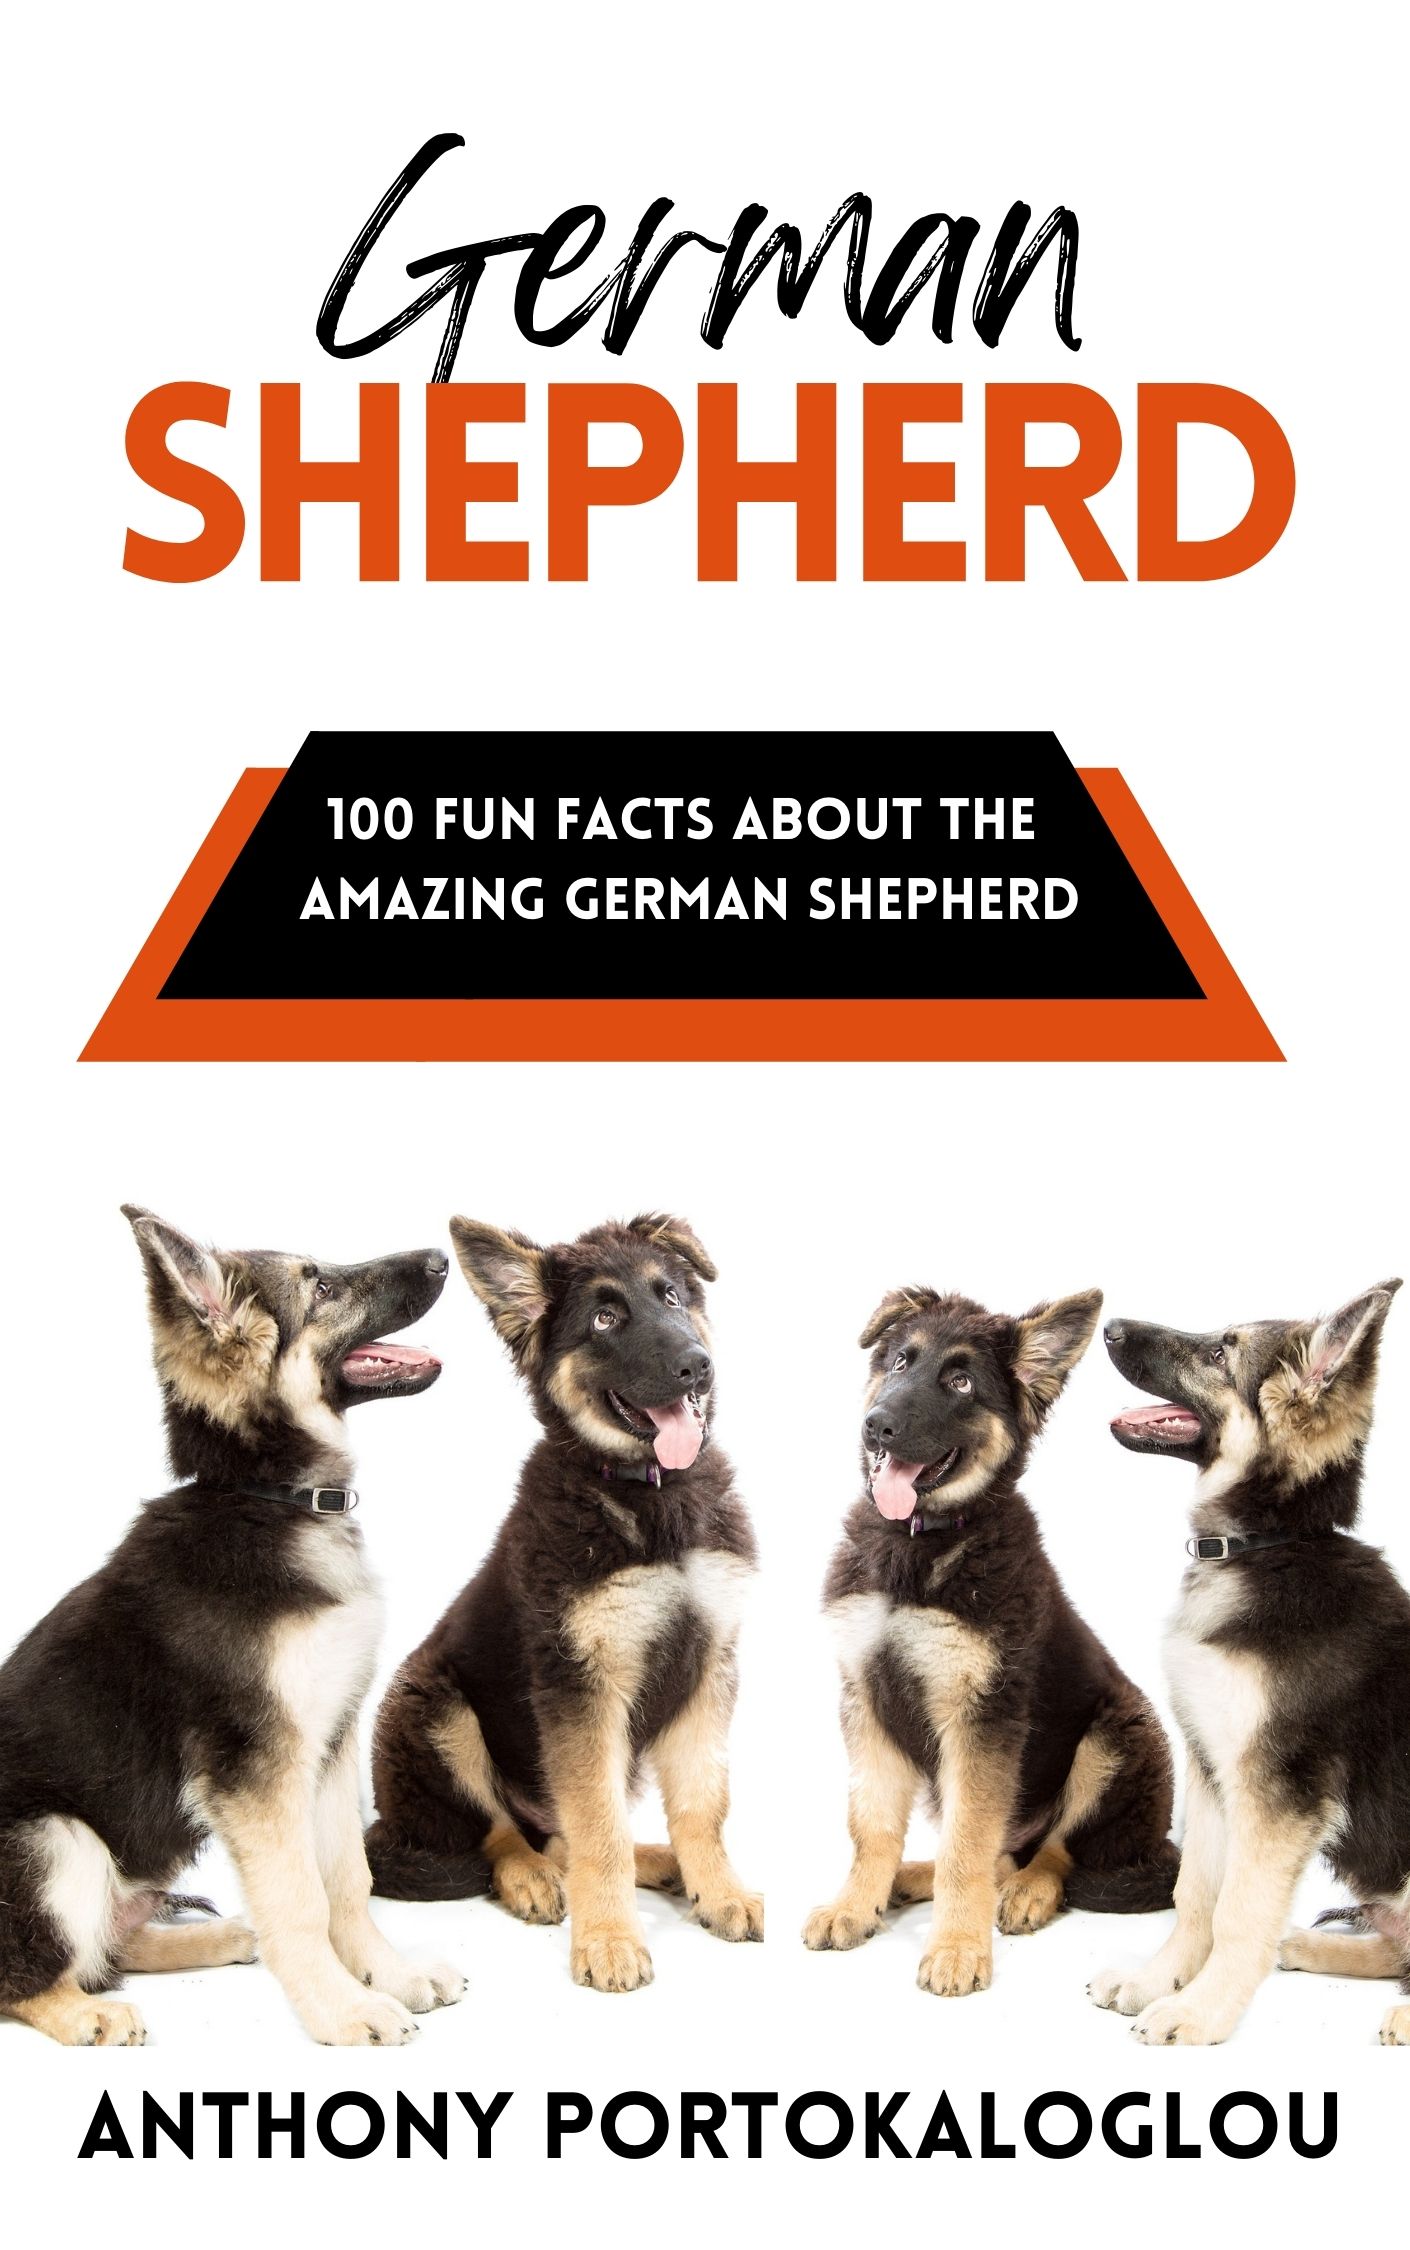 FREE: German Shepherd: 100 Fun Facts About the Amazing German Shepherd by Anthony Portokaloglou